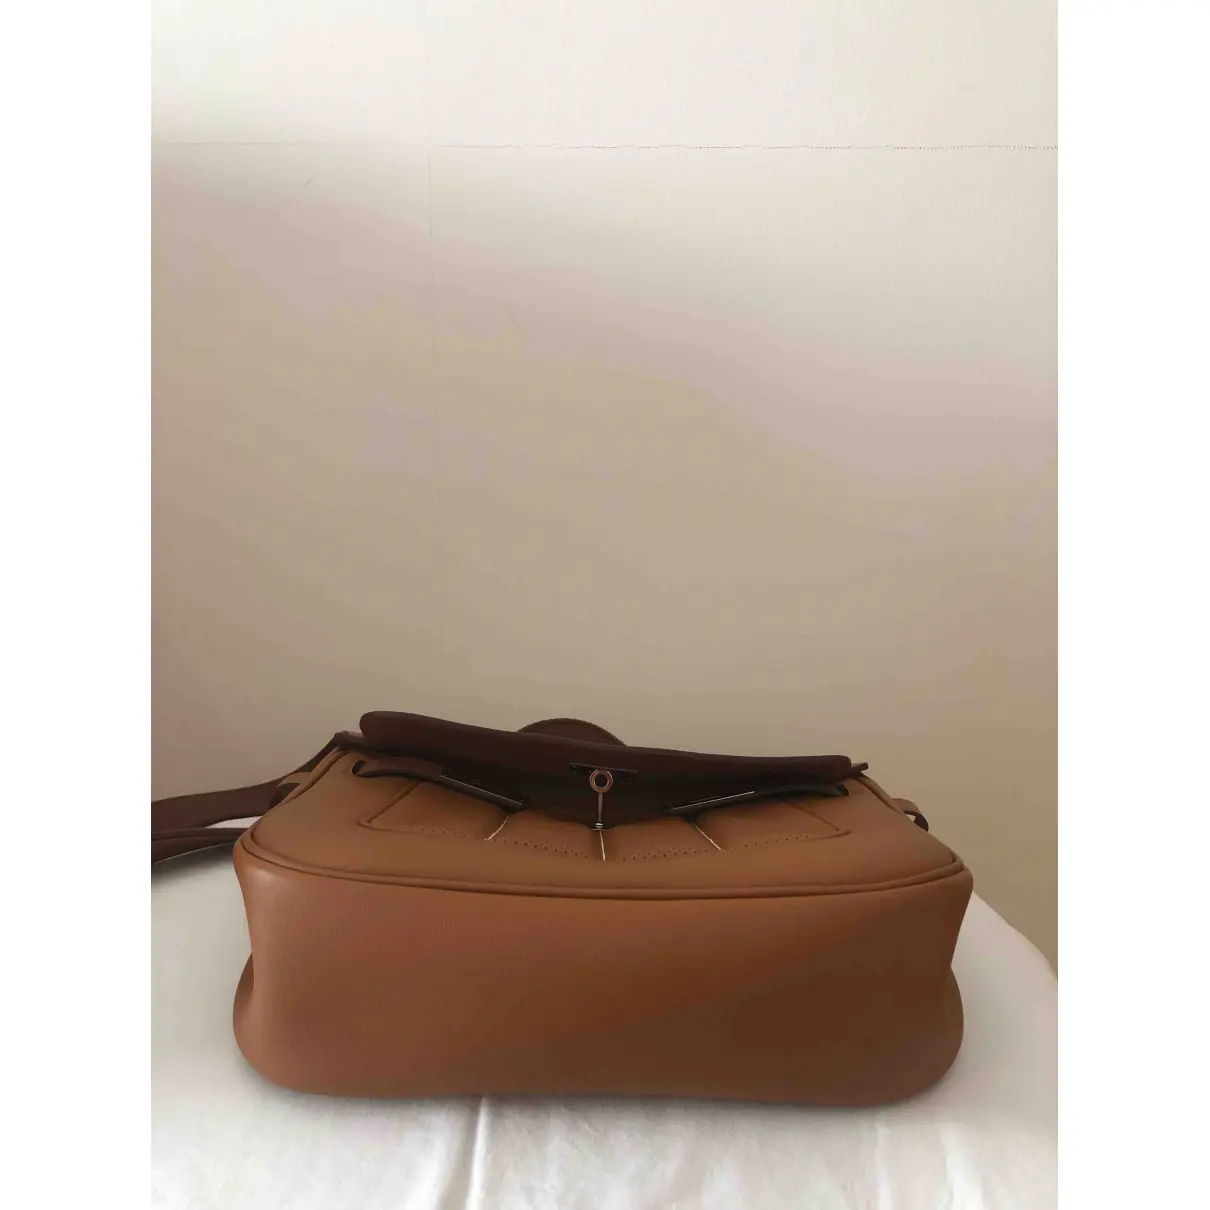 Berline leather handbag Hermès